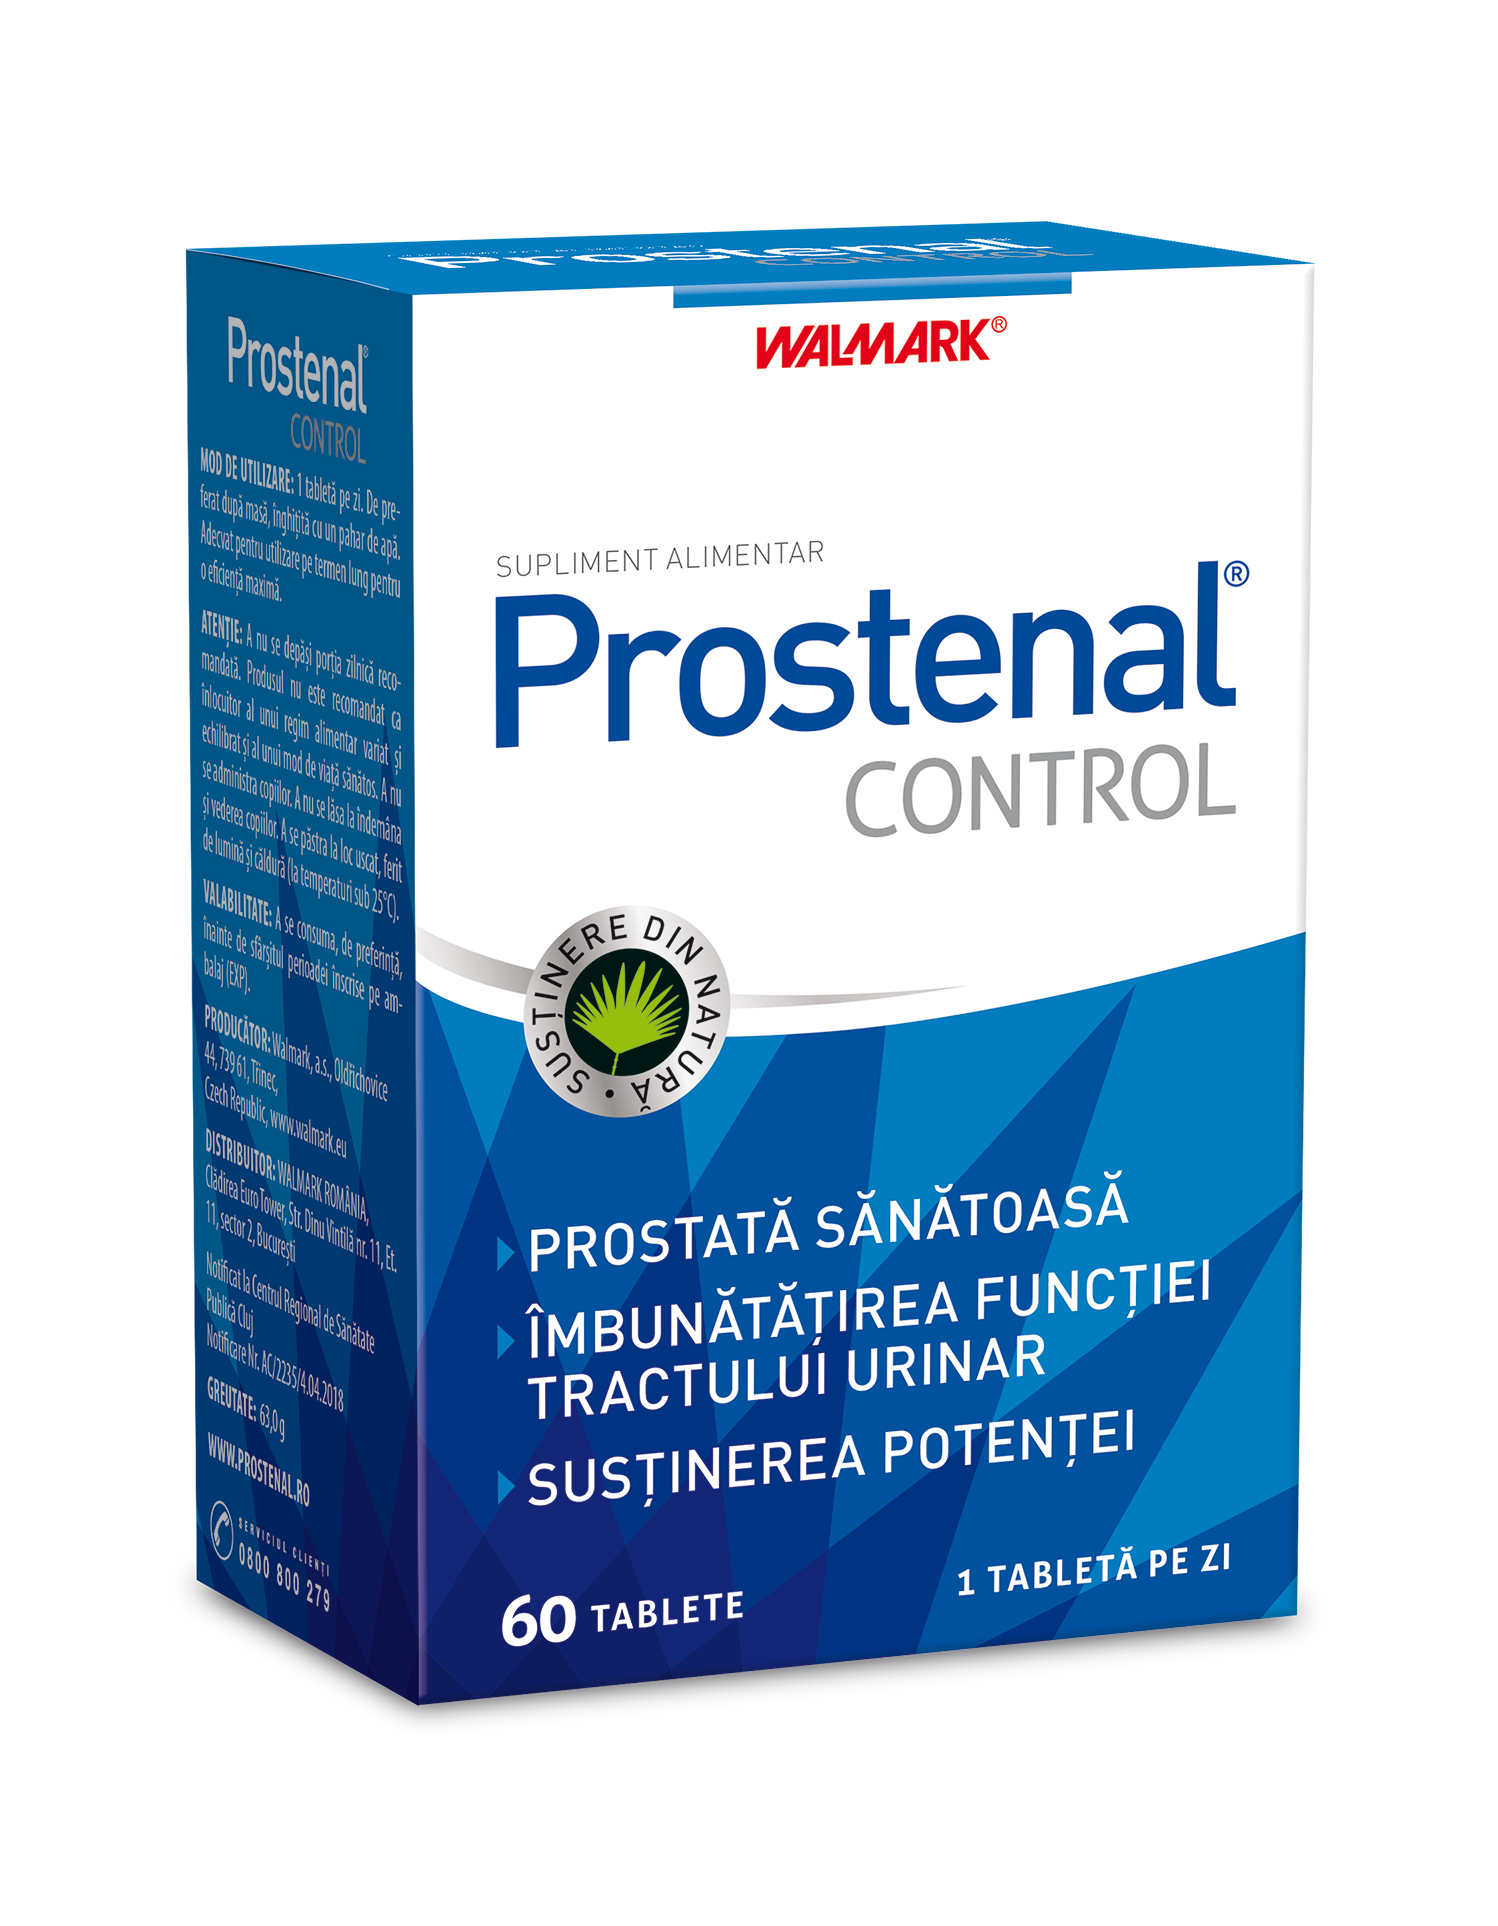 prostenal control pareri)